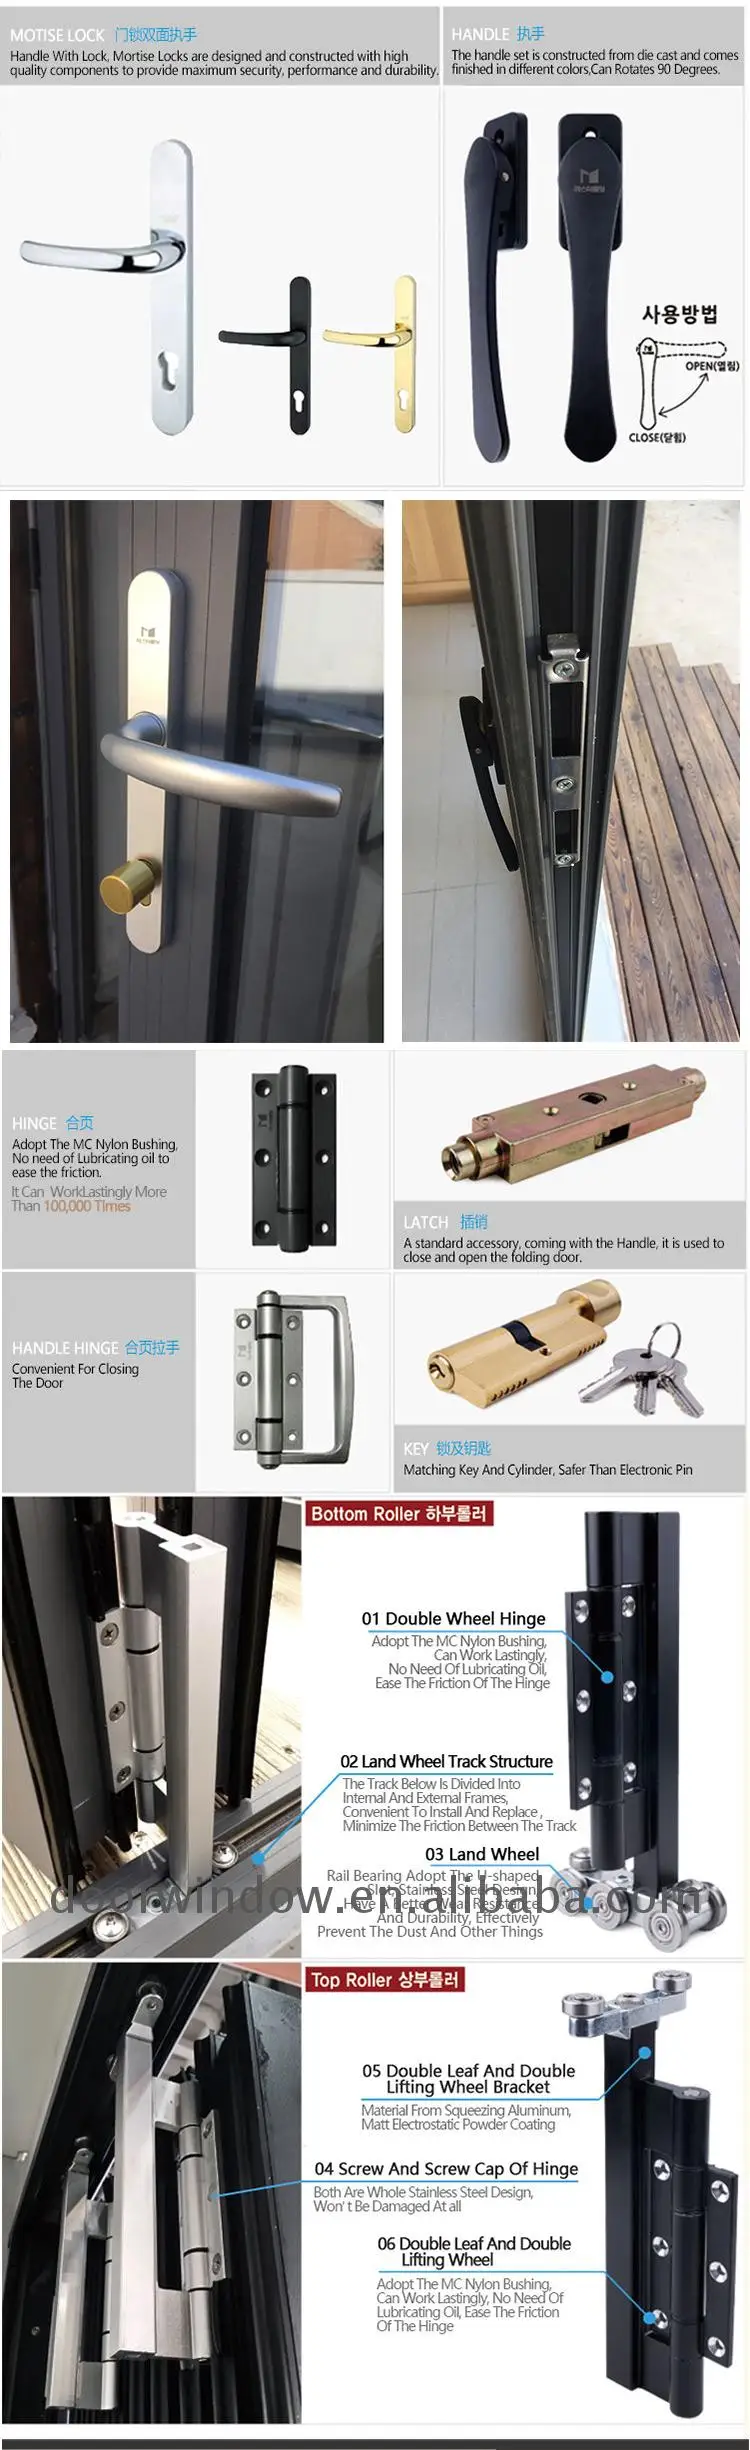 Wood grain aluminium frame glass doors and bi-fold door waterproof toilet alloy casement windows